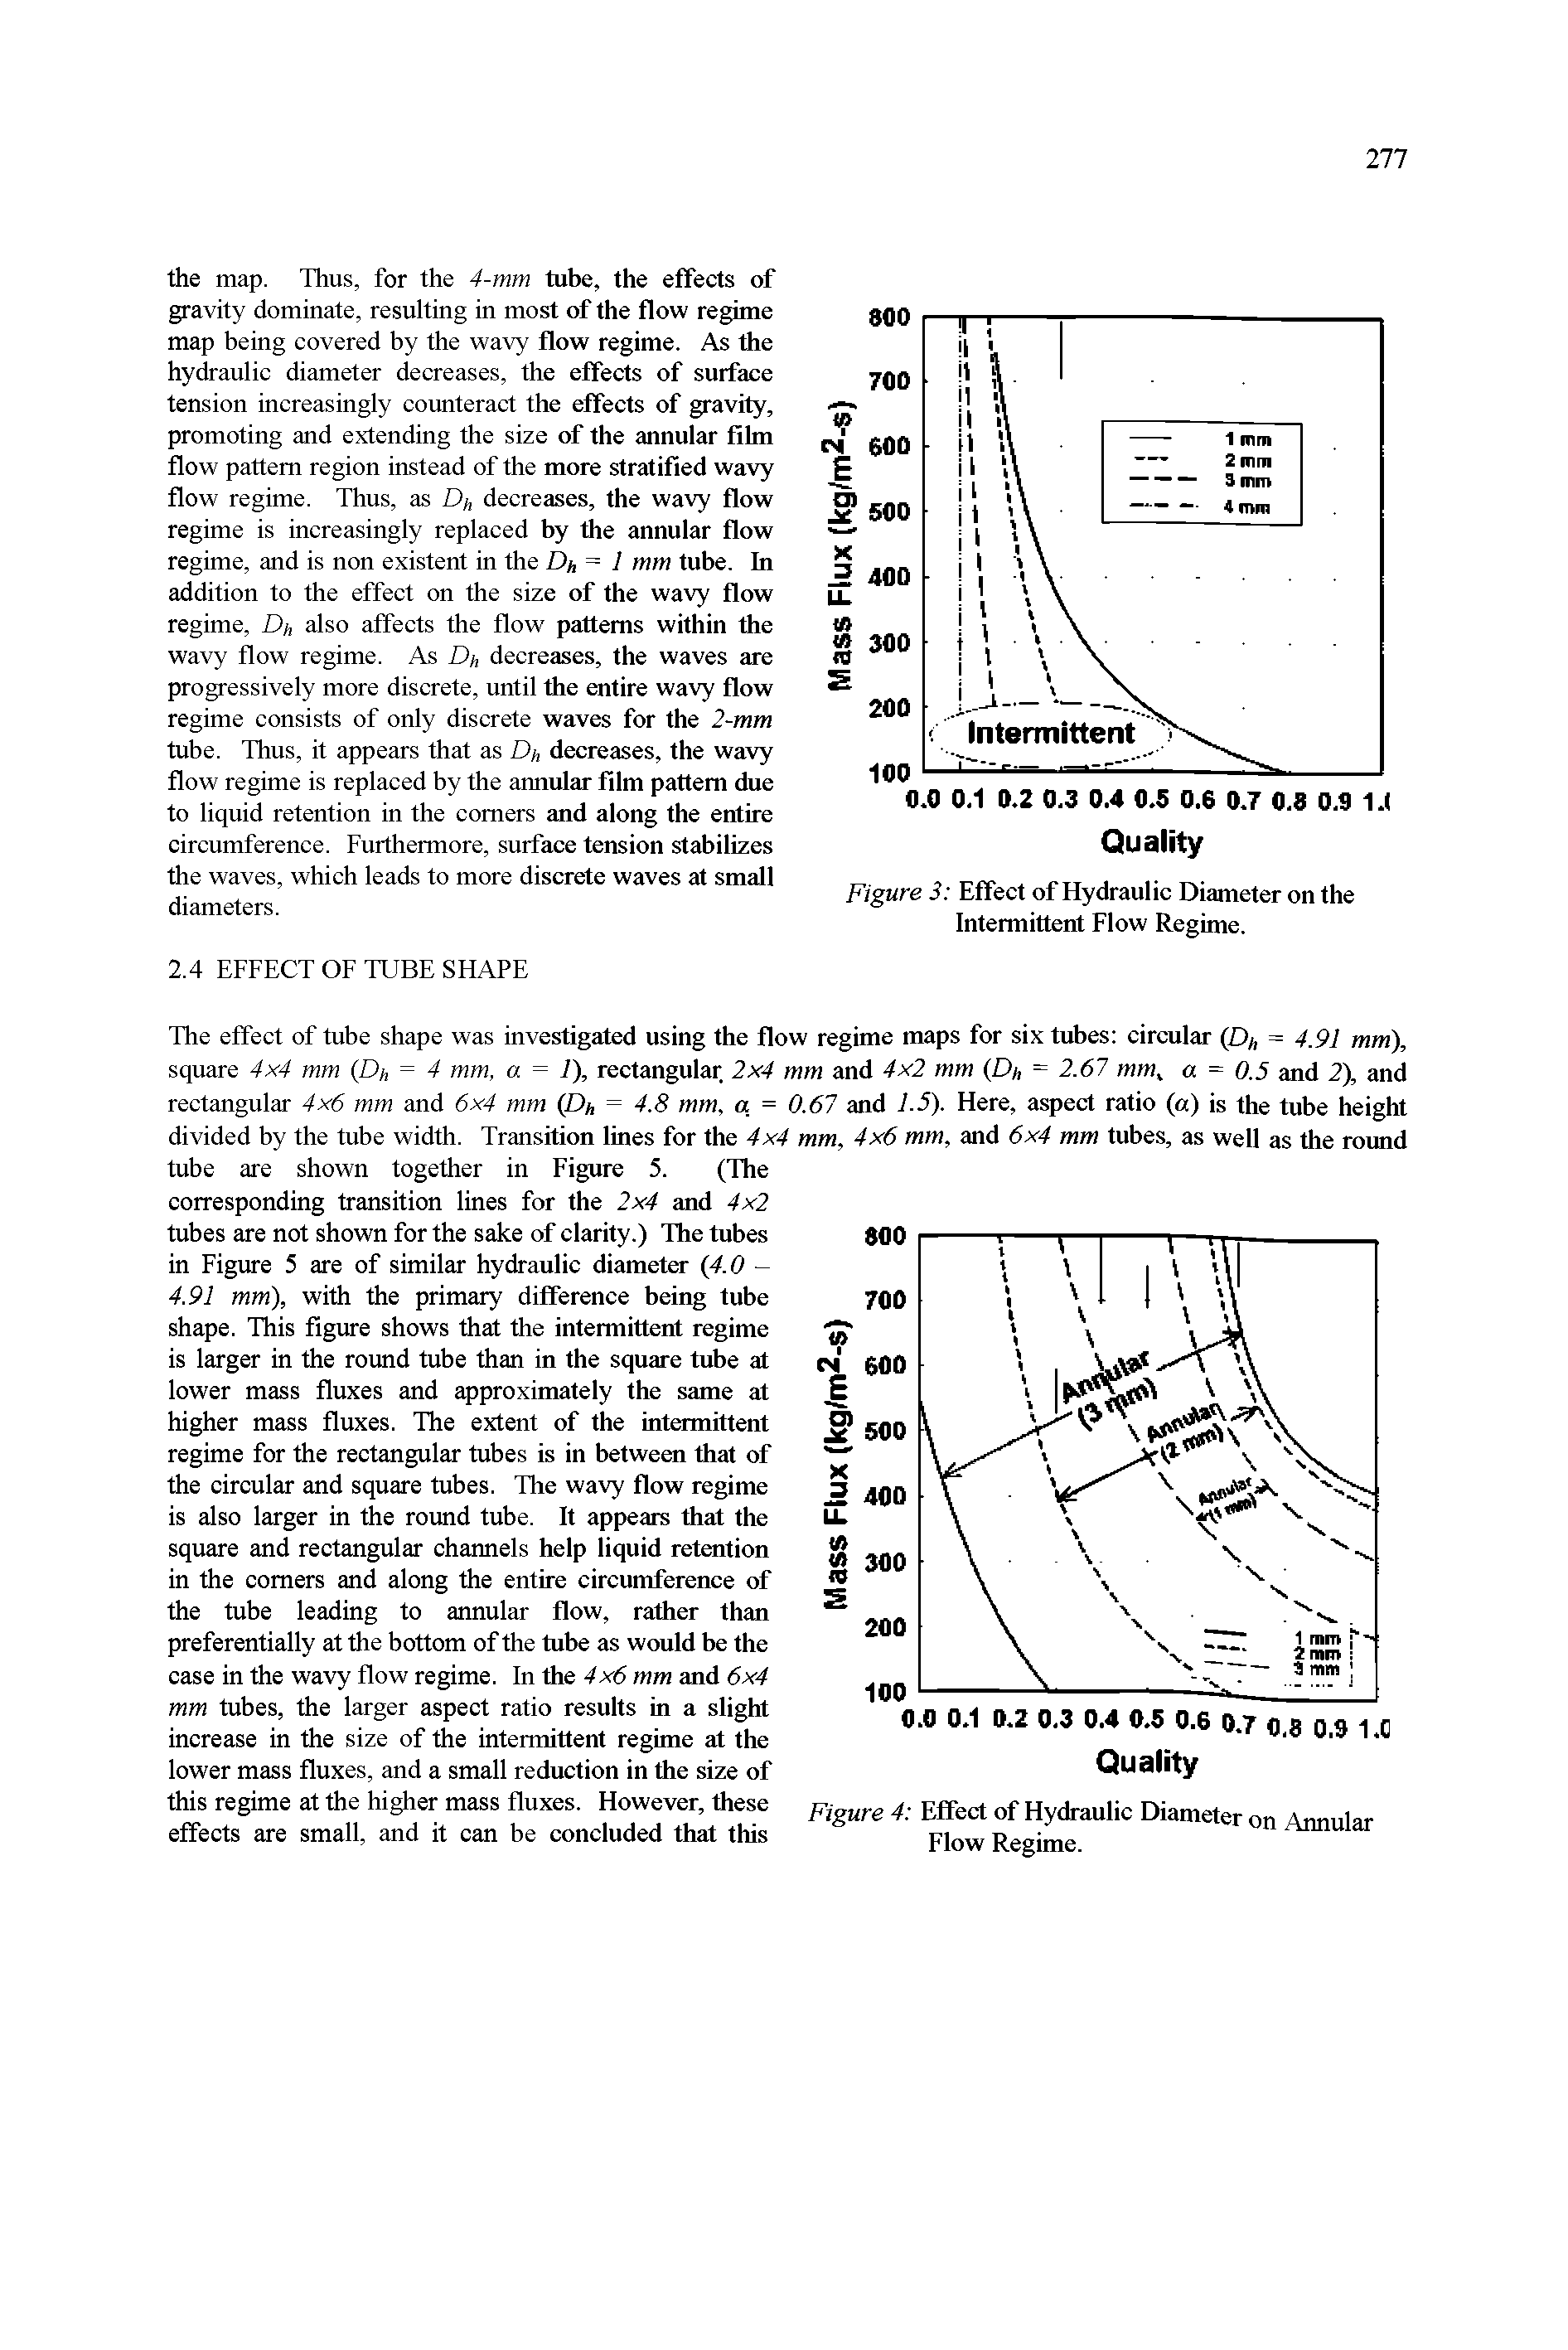 Figure 3 Effect of Hydraulic Diameter on the Intermittent Flow Regime.